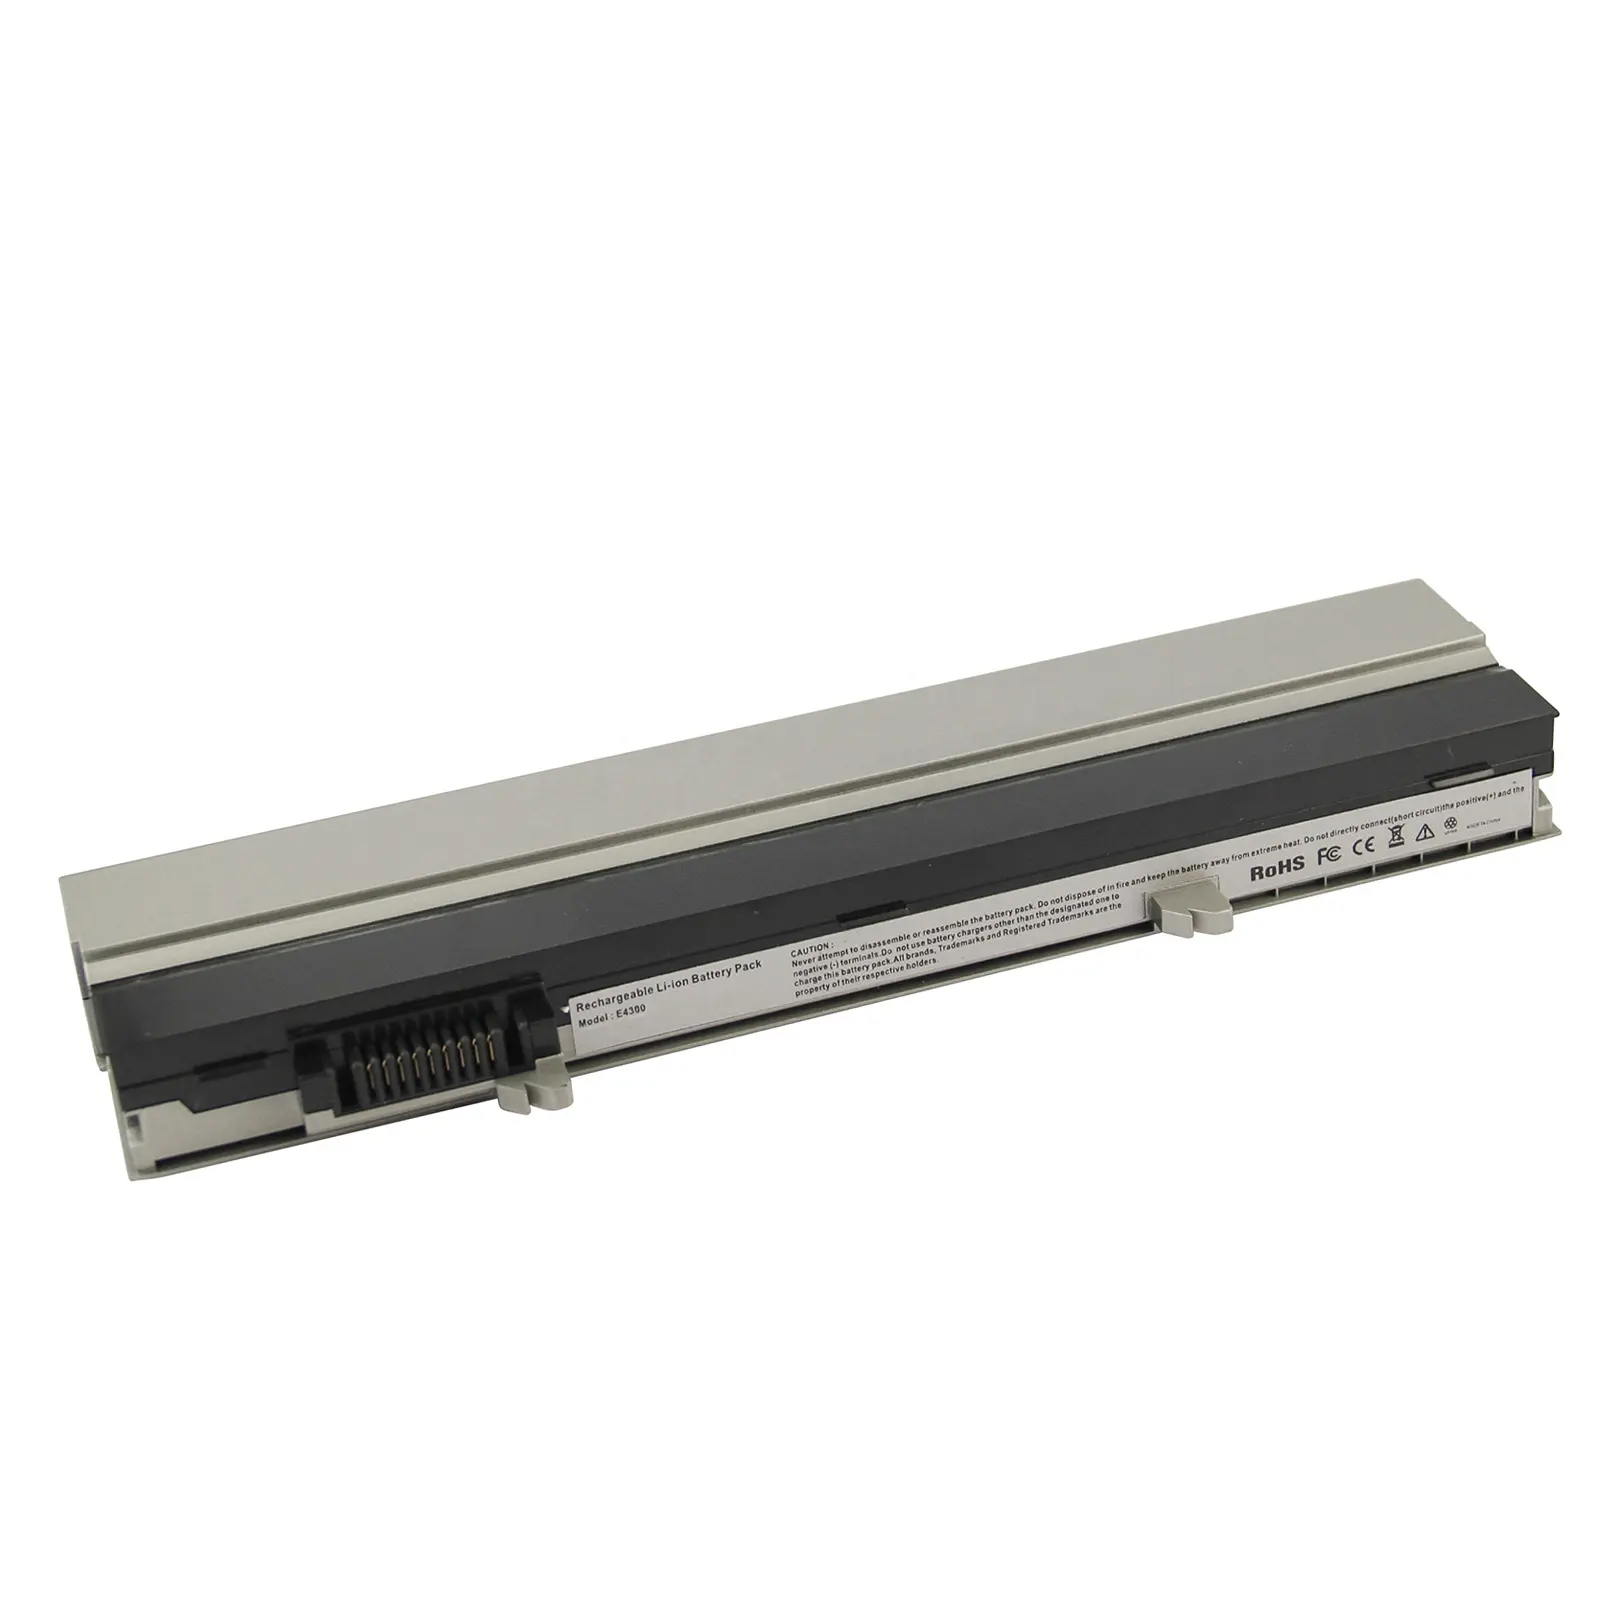 replacement notebook battery for Dell Latitude E4300 E4310 0FX8X 312-0822 312-0823 312-9955 451-10636 451-10638